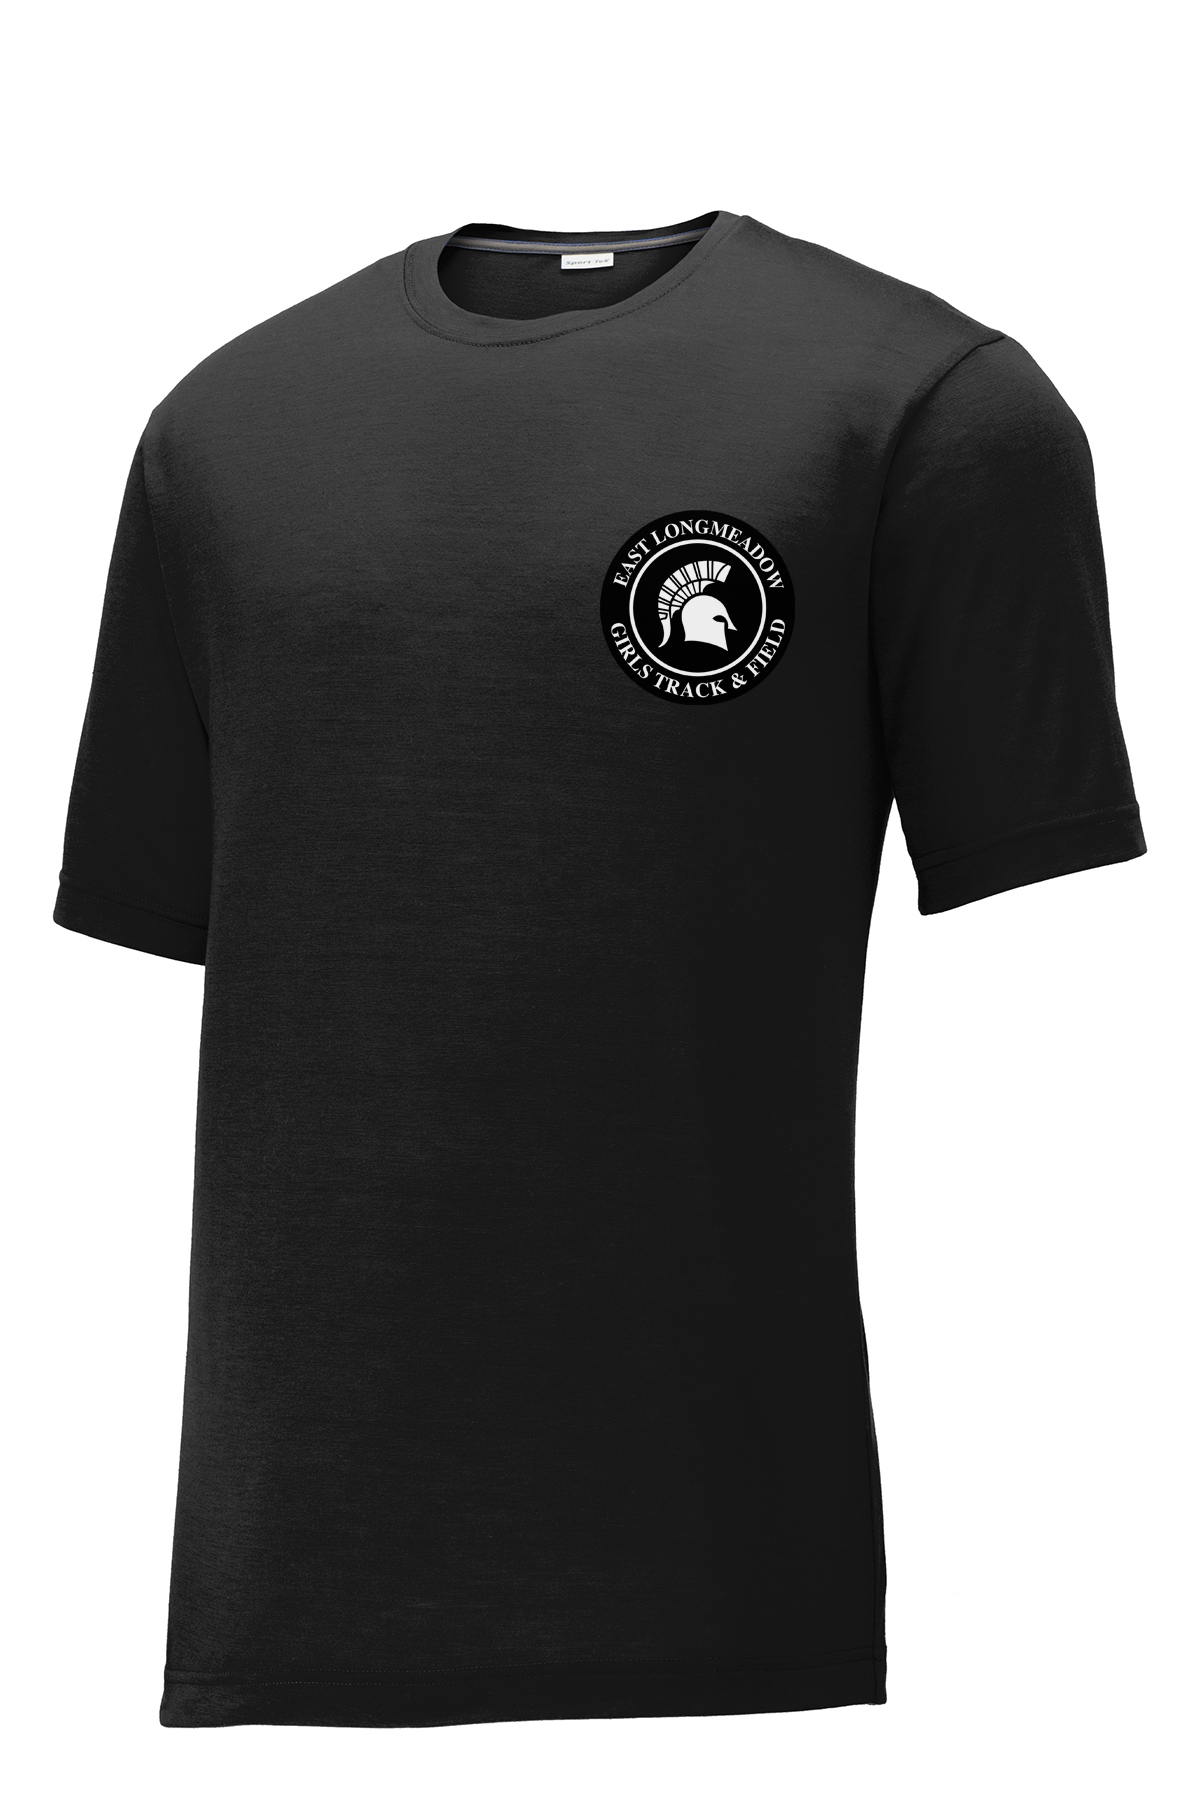 East Longmeadow Girls Track - Men's CottonTouch Performance T-Shirt (Black)